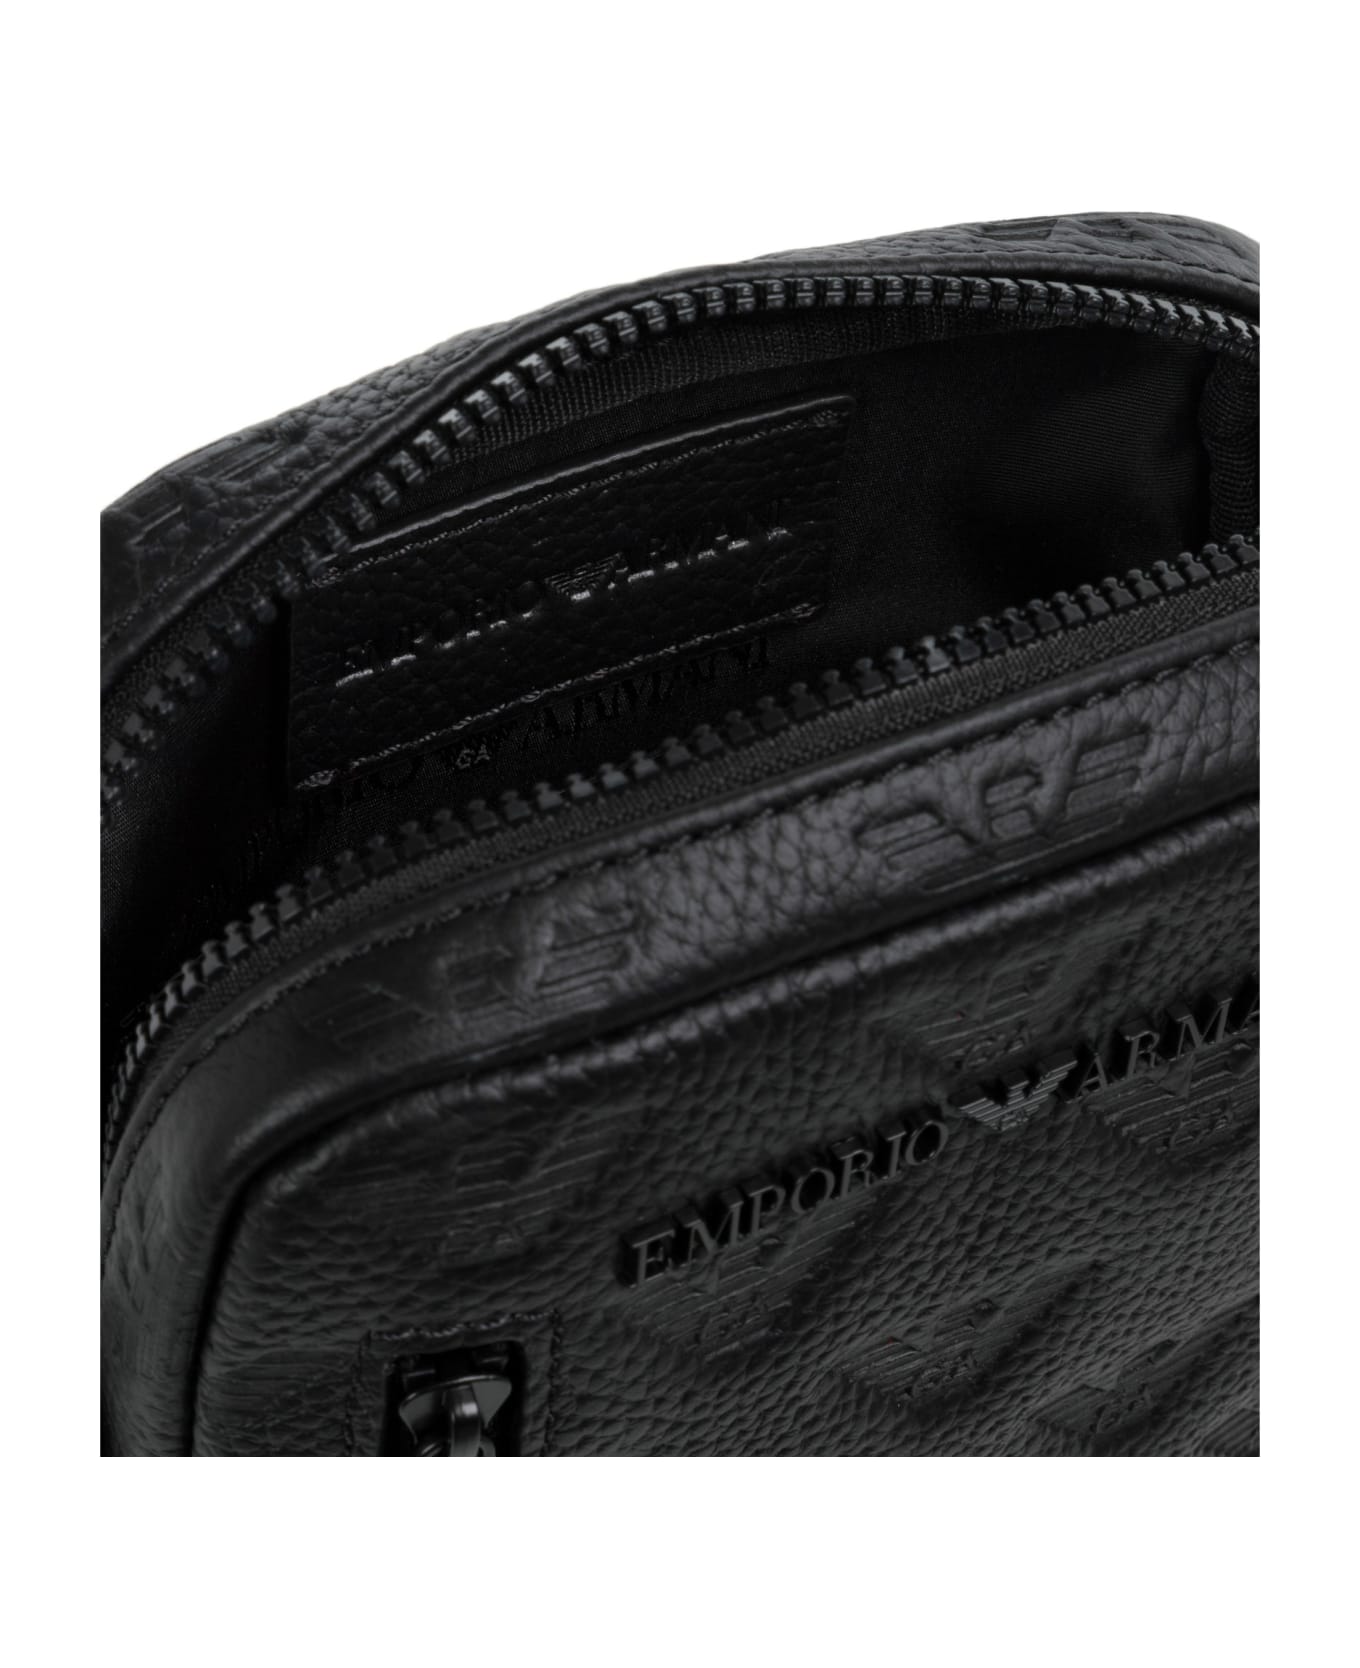 Emporio Armani Leather Crossbody Bag - Black ショルダーバッグ